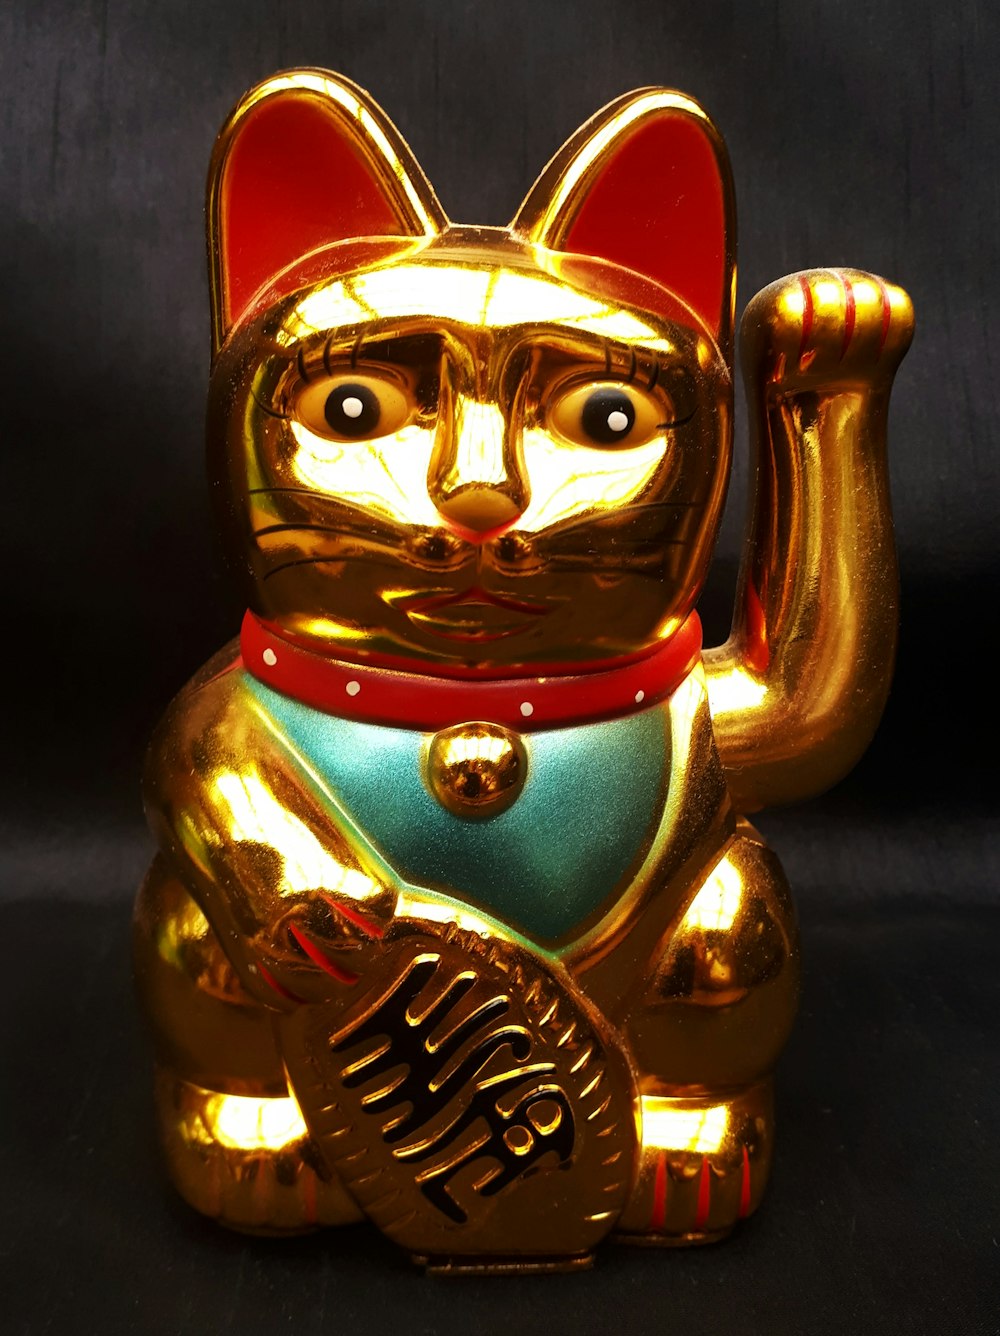 gold and red ceramic cat figurine